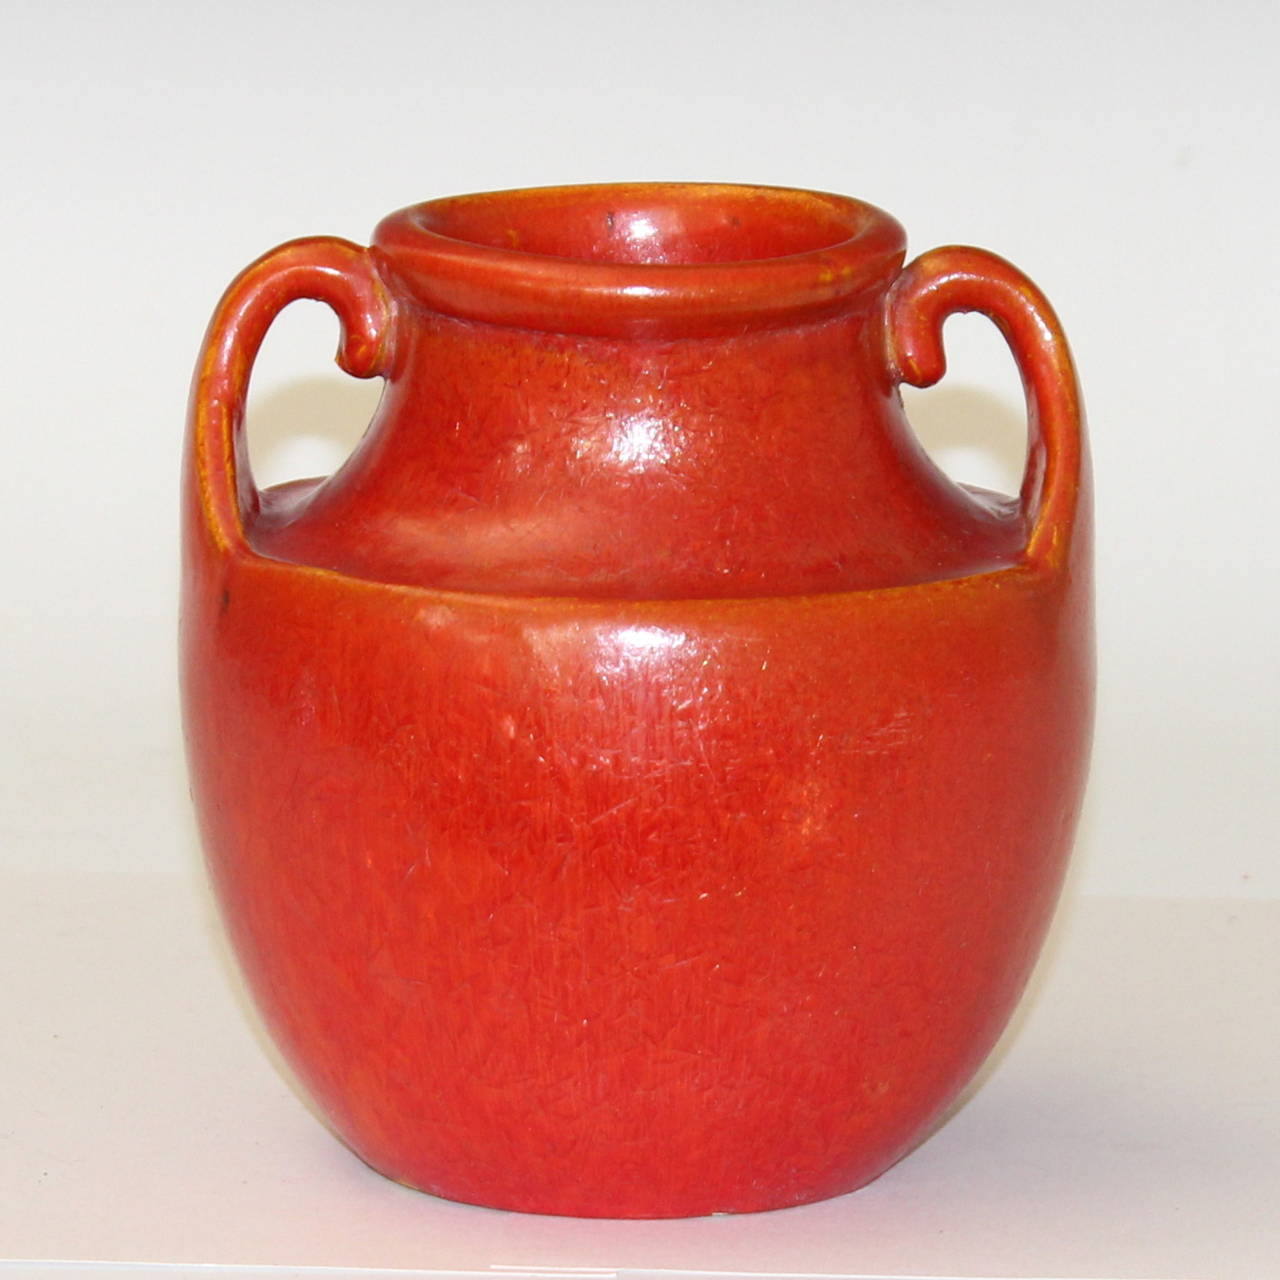 Vintage Awaji Pottery vase in chromium orange/red crystalline glaze, circa 1930.
Measures: 6